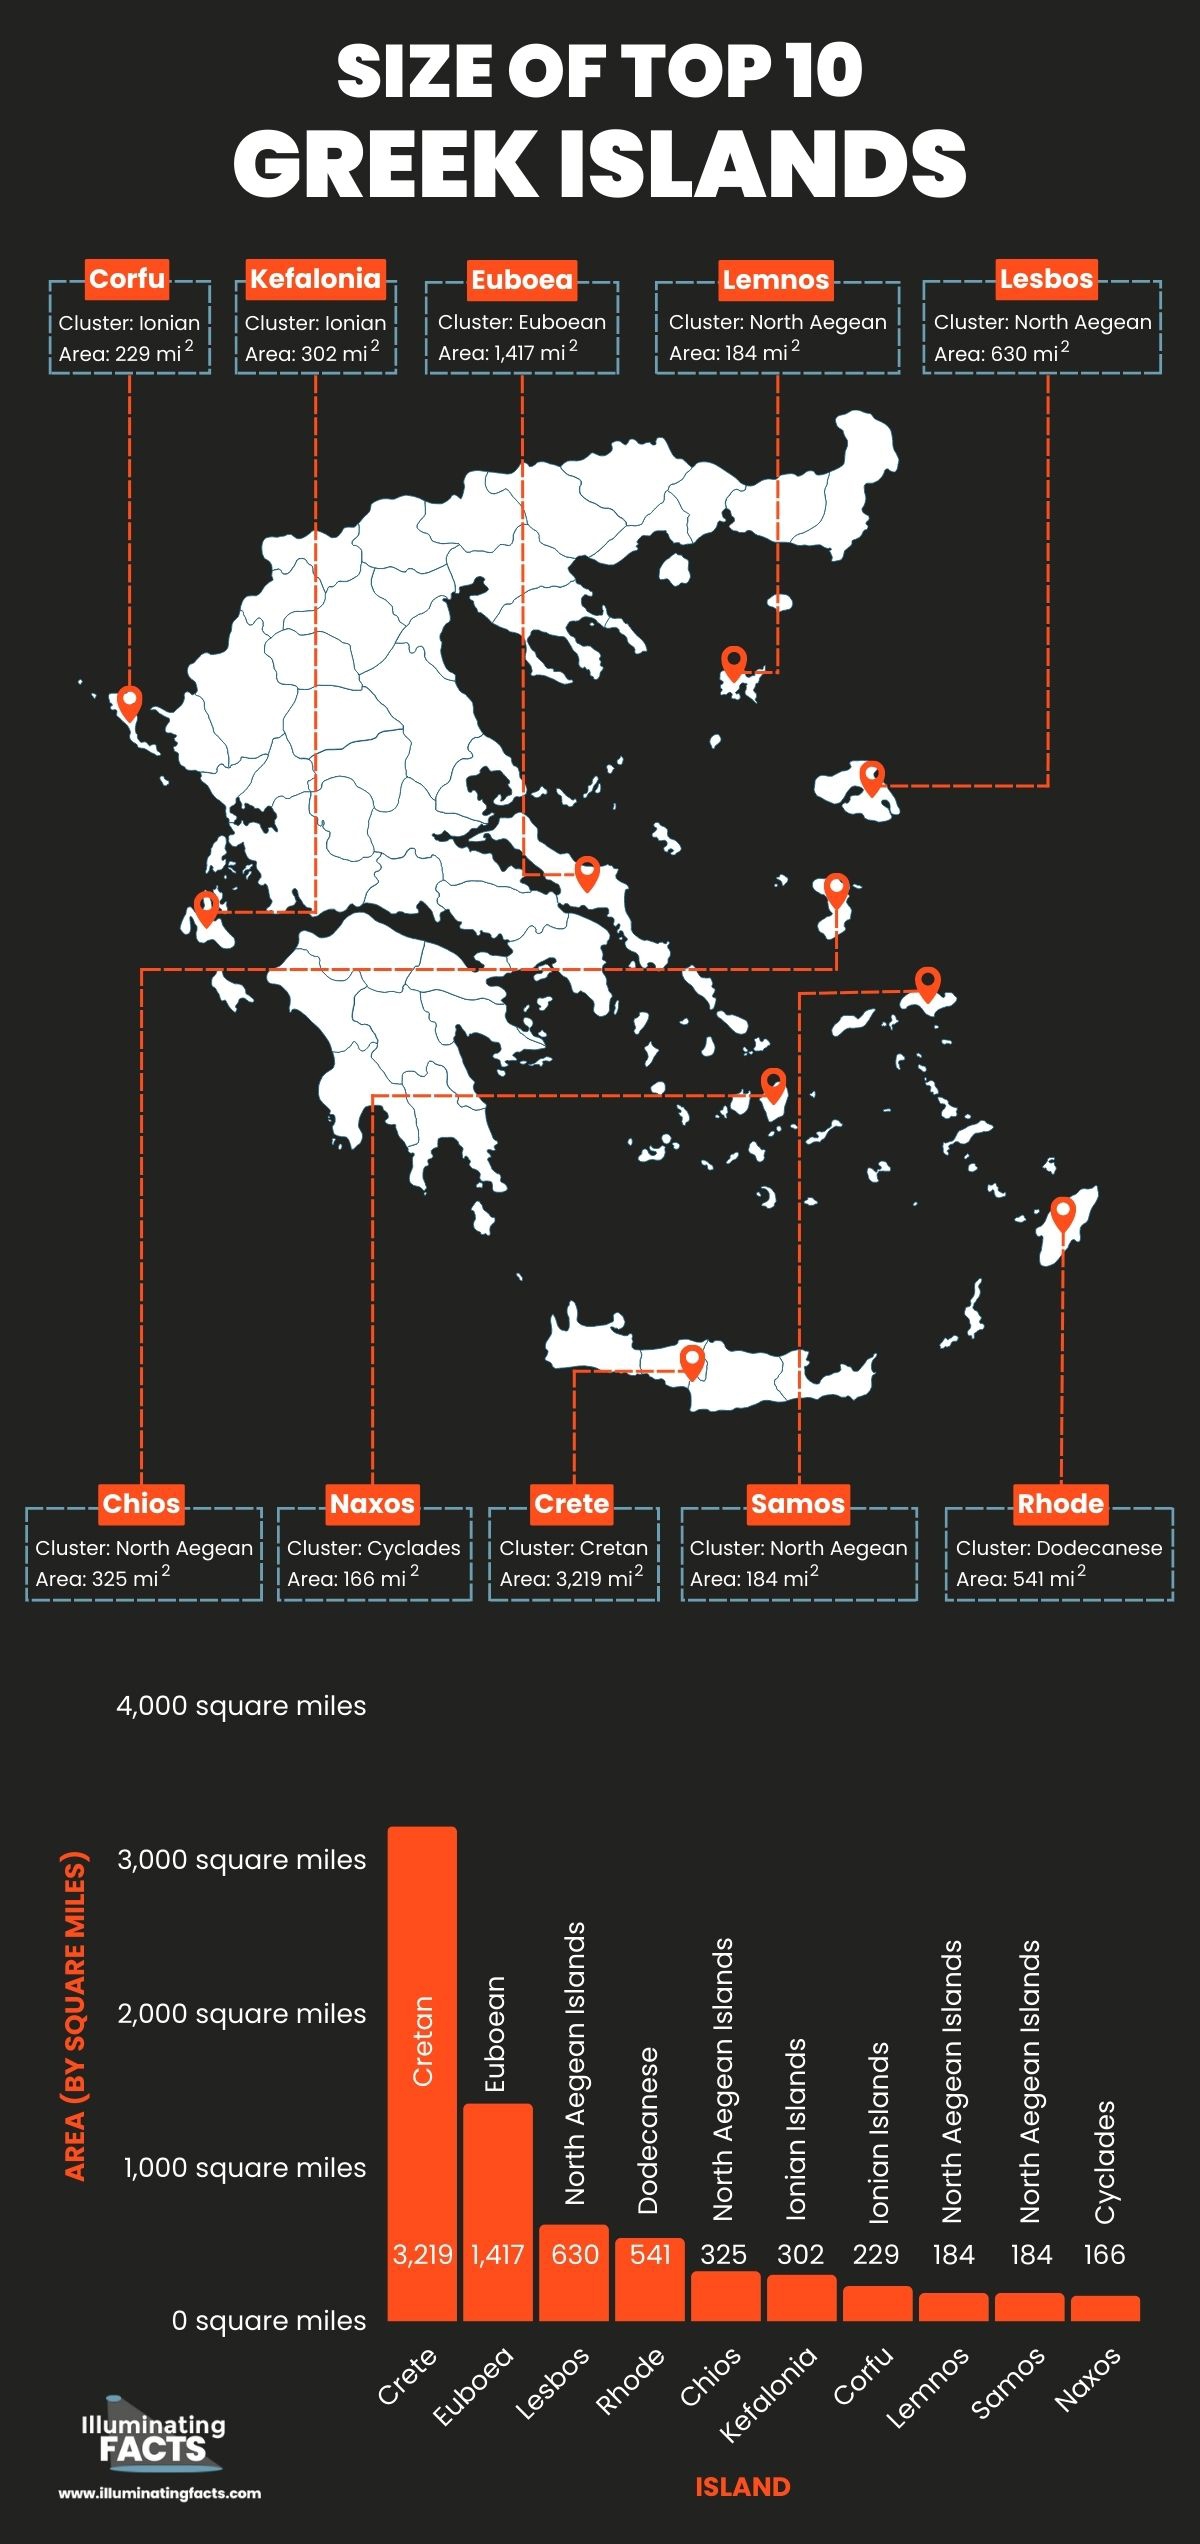 Size of Top 10 Greek Islands